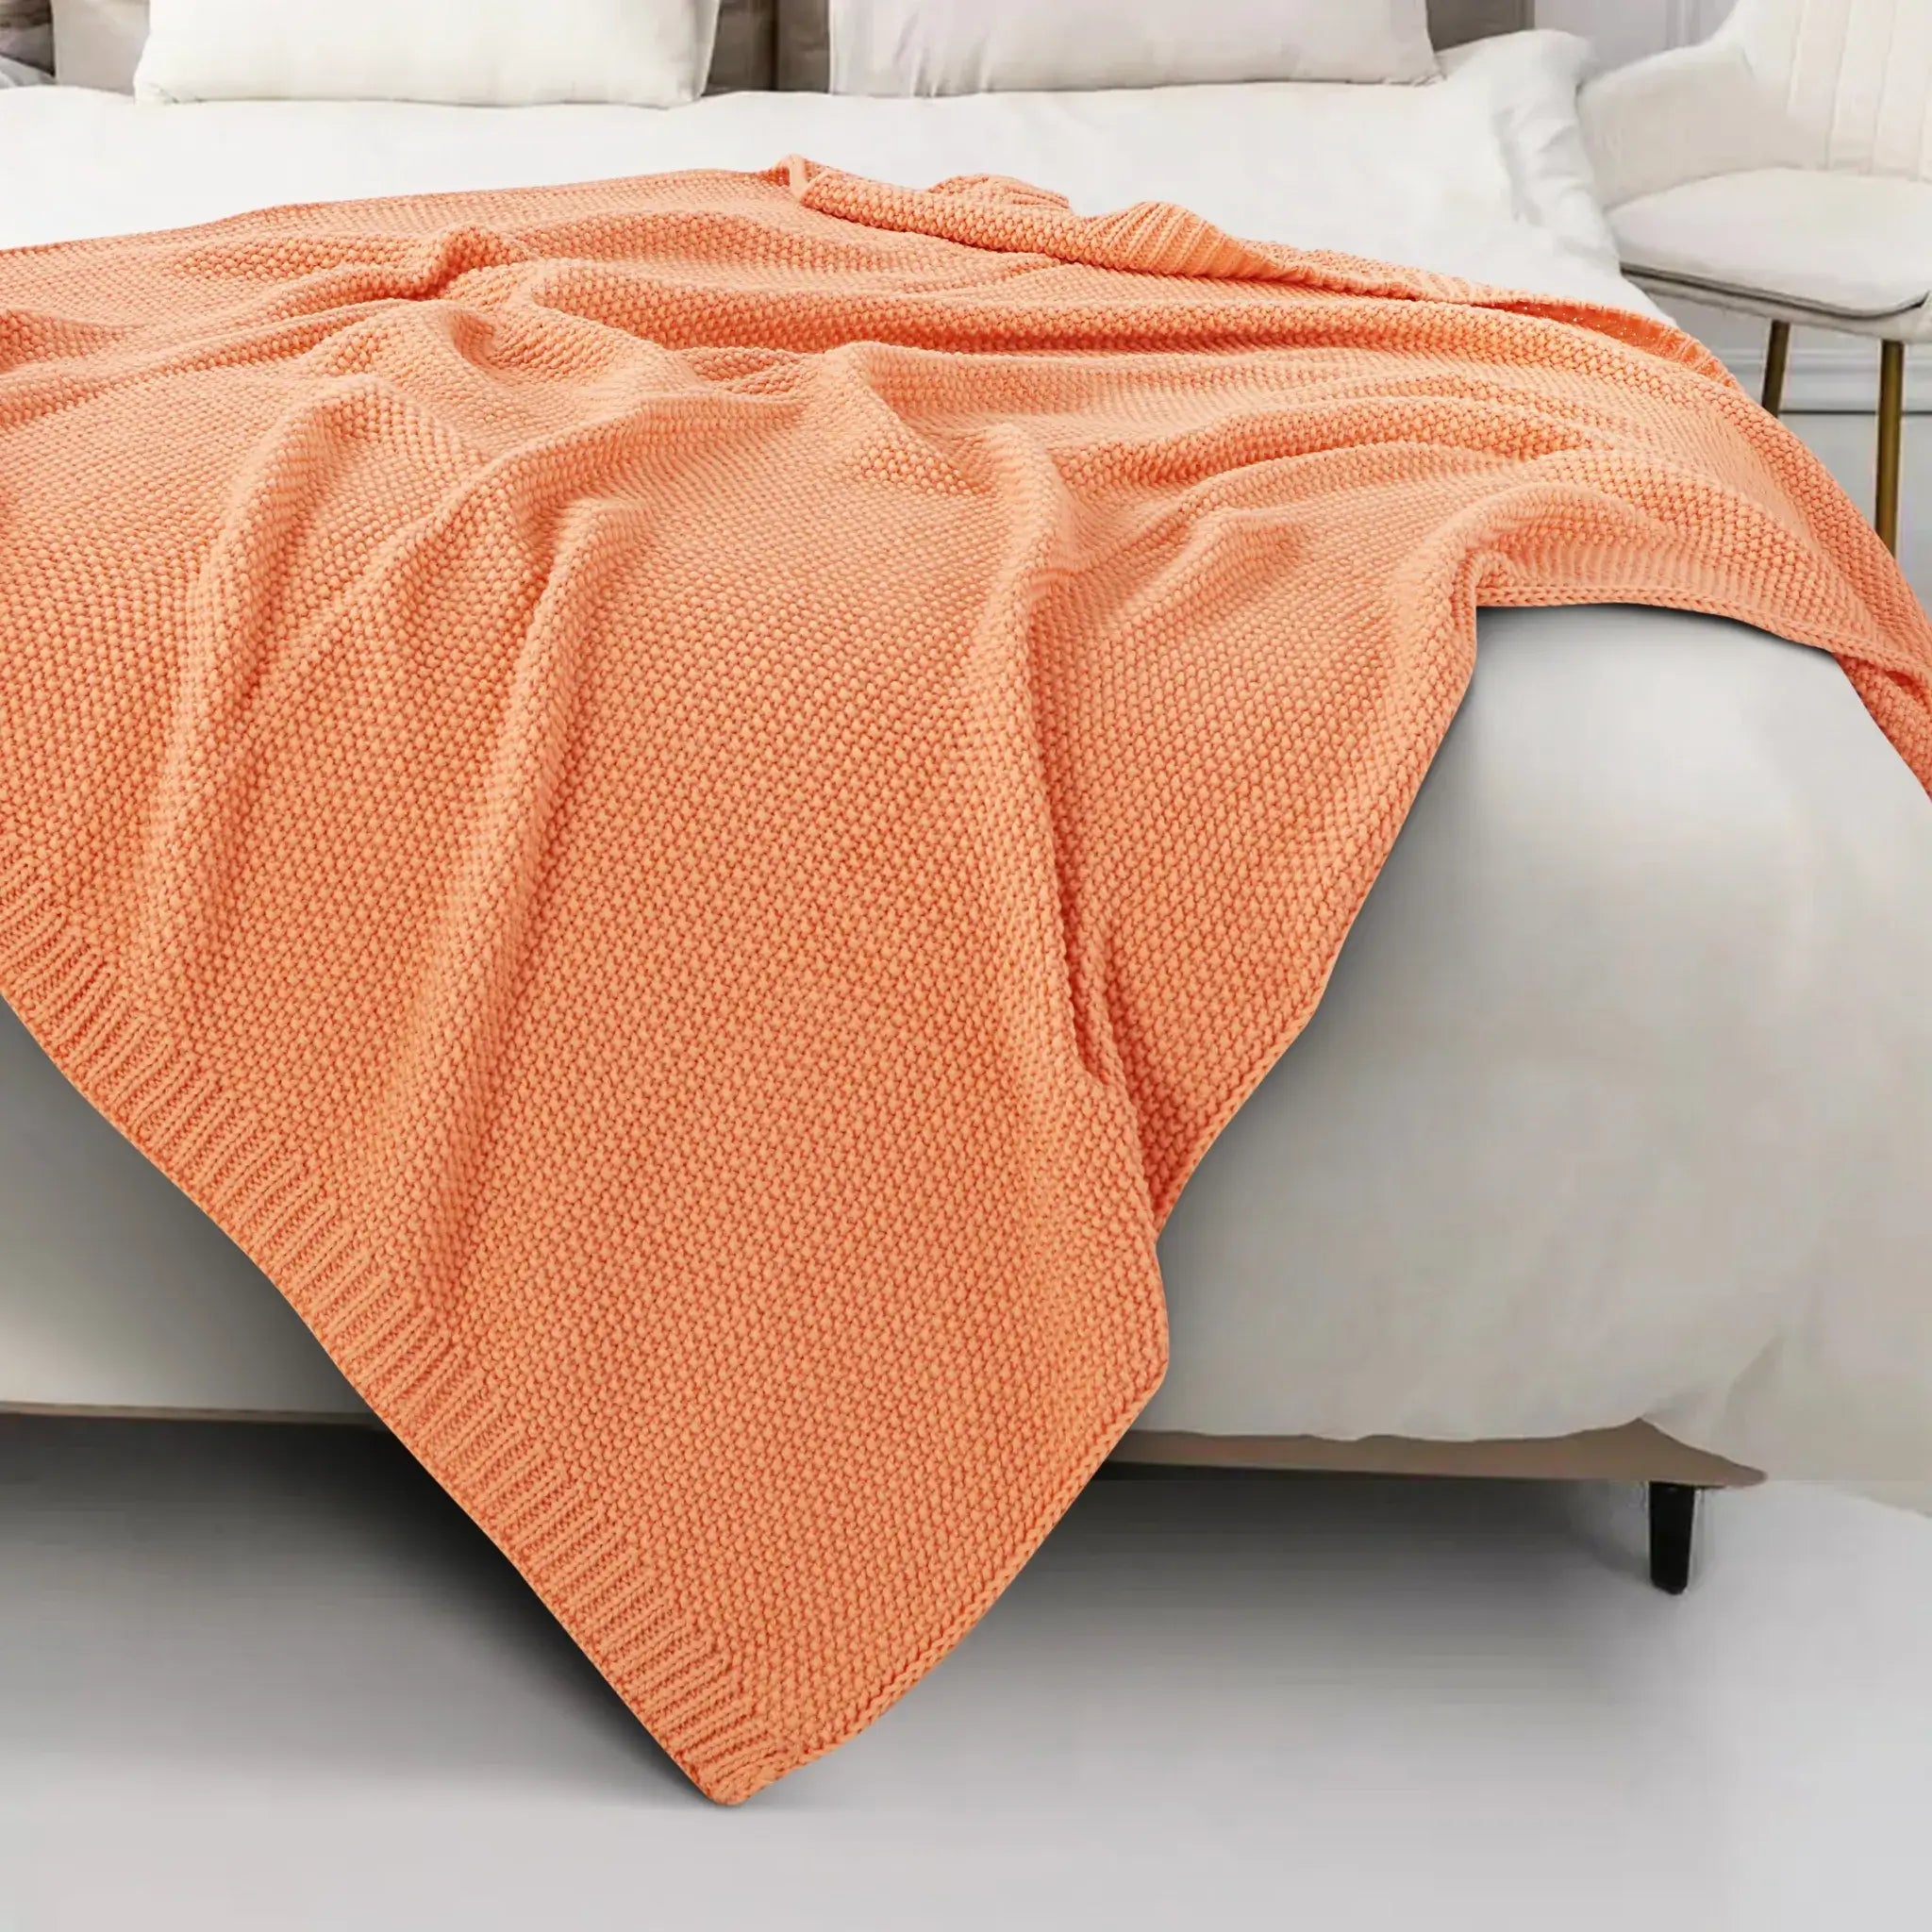 Malako Coral Orange Premium Knitted Throw - MALAKO